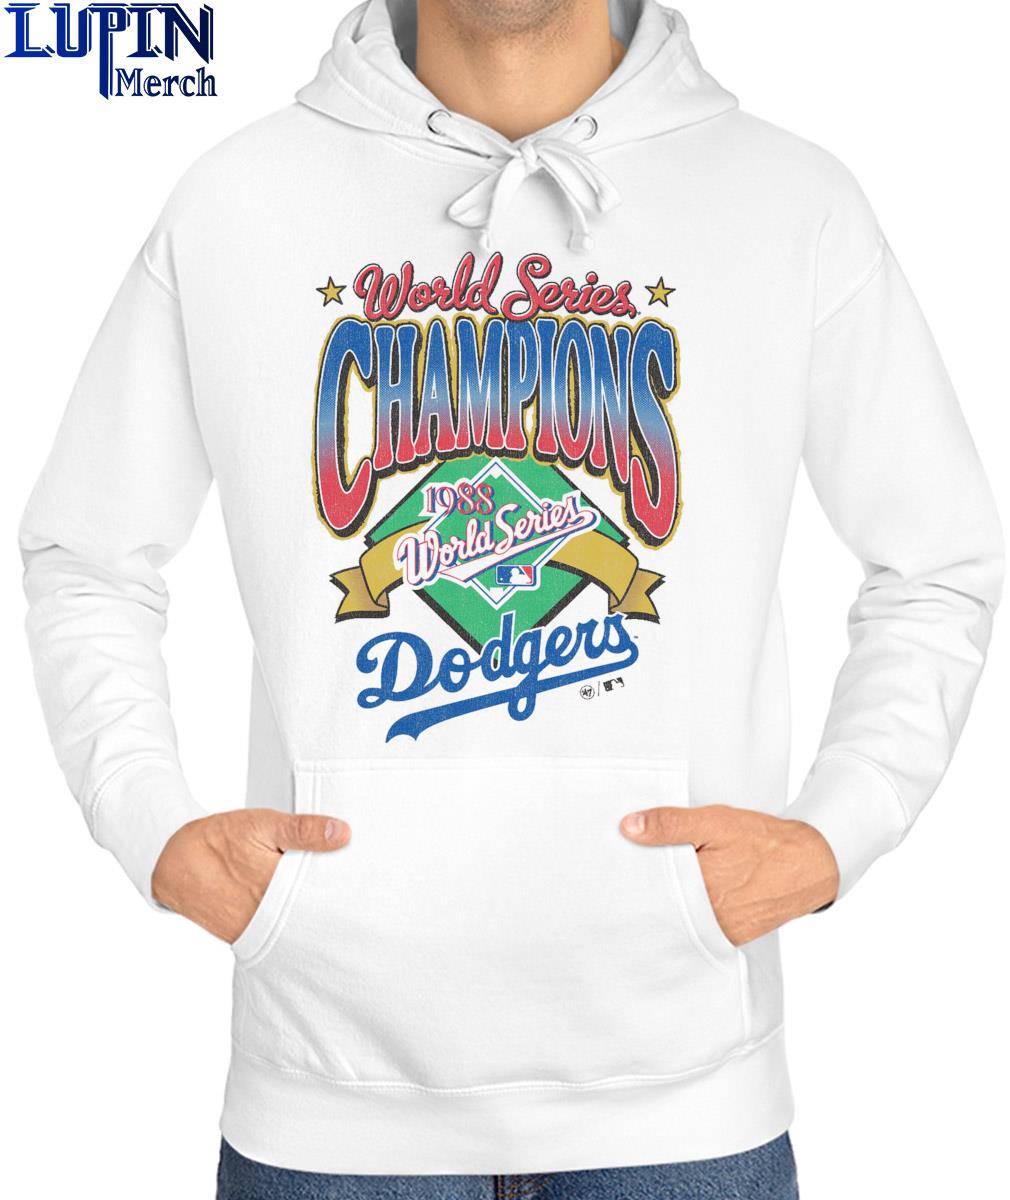 47 Dodgers Baseball Los Angeles Dodgers Walk Off Long Sleeve T-Shirt 2XLarge Royal